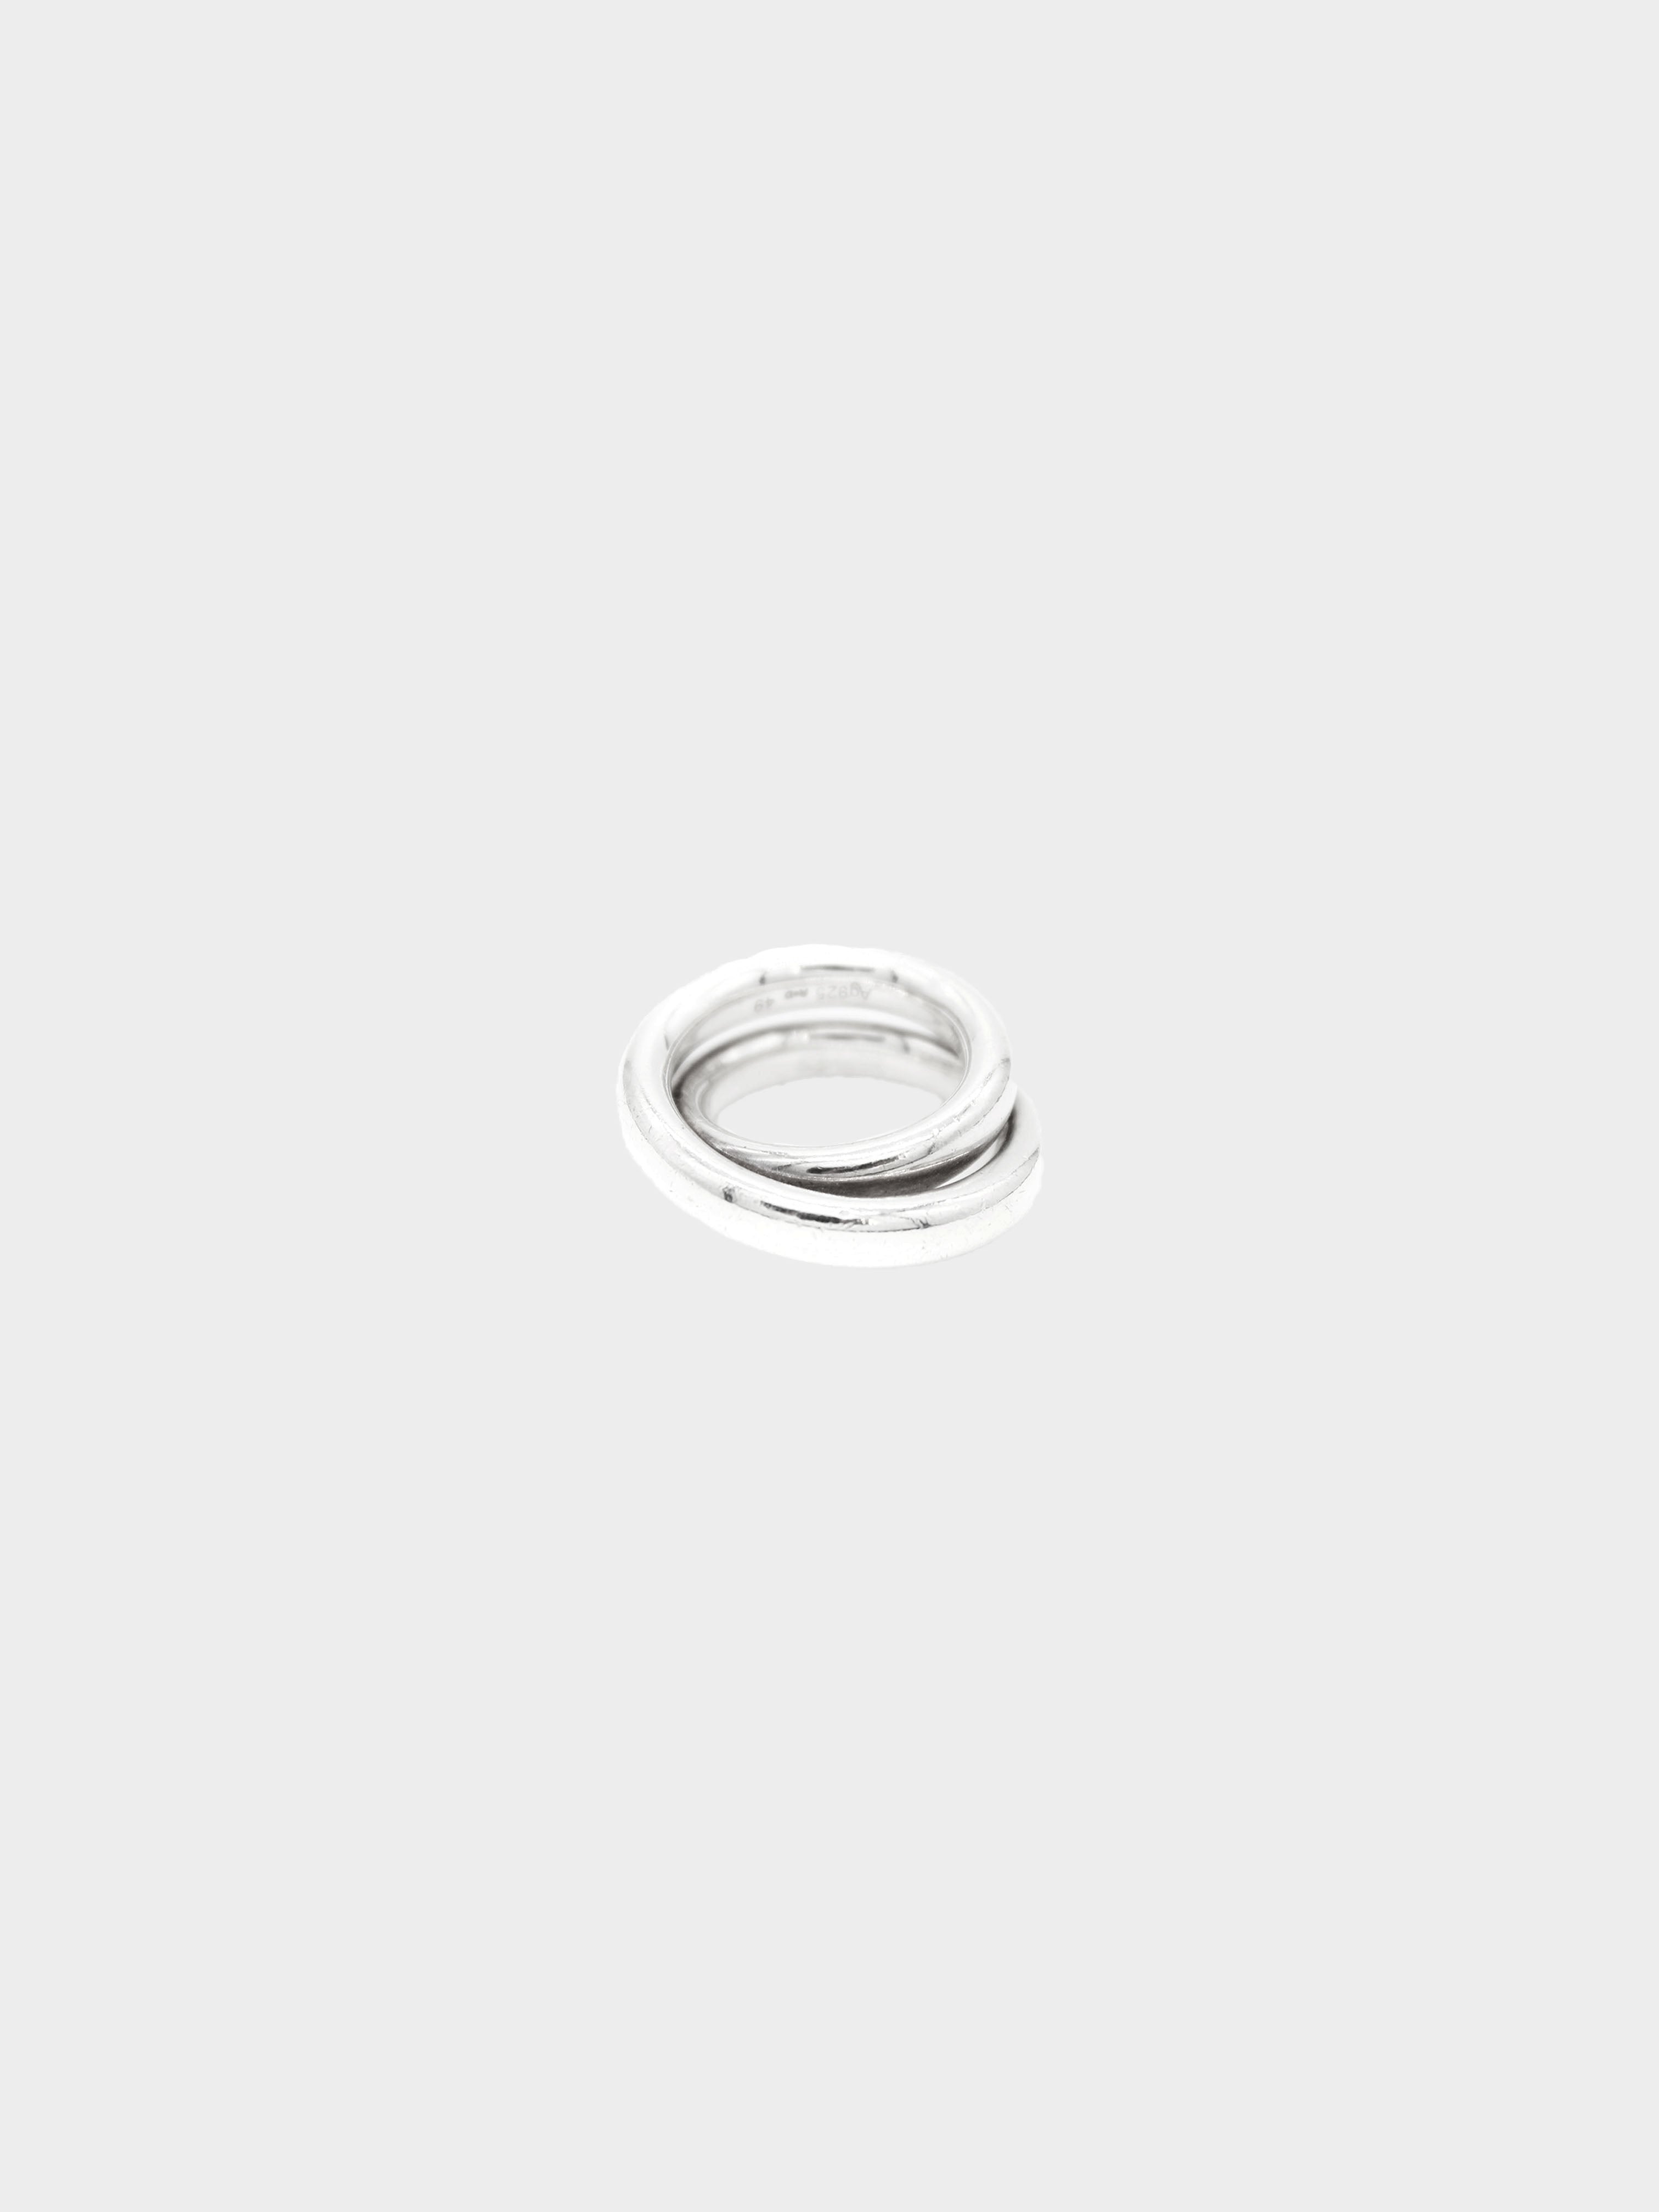 Hermès 2000s Silver Vertige Ring